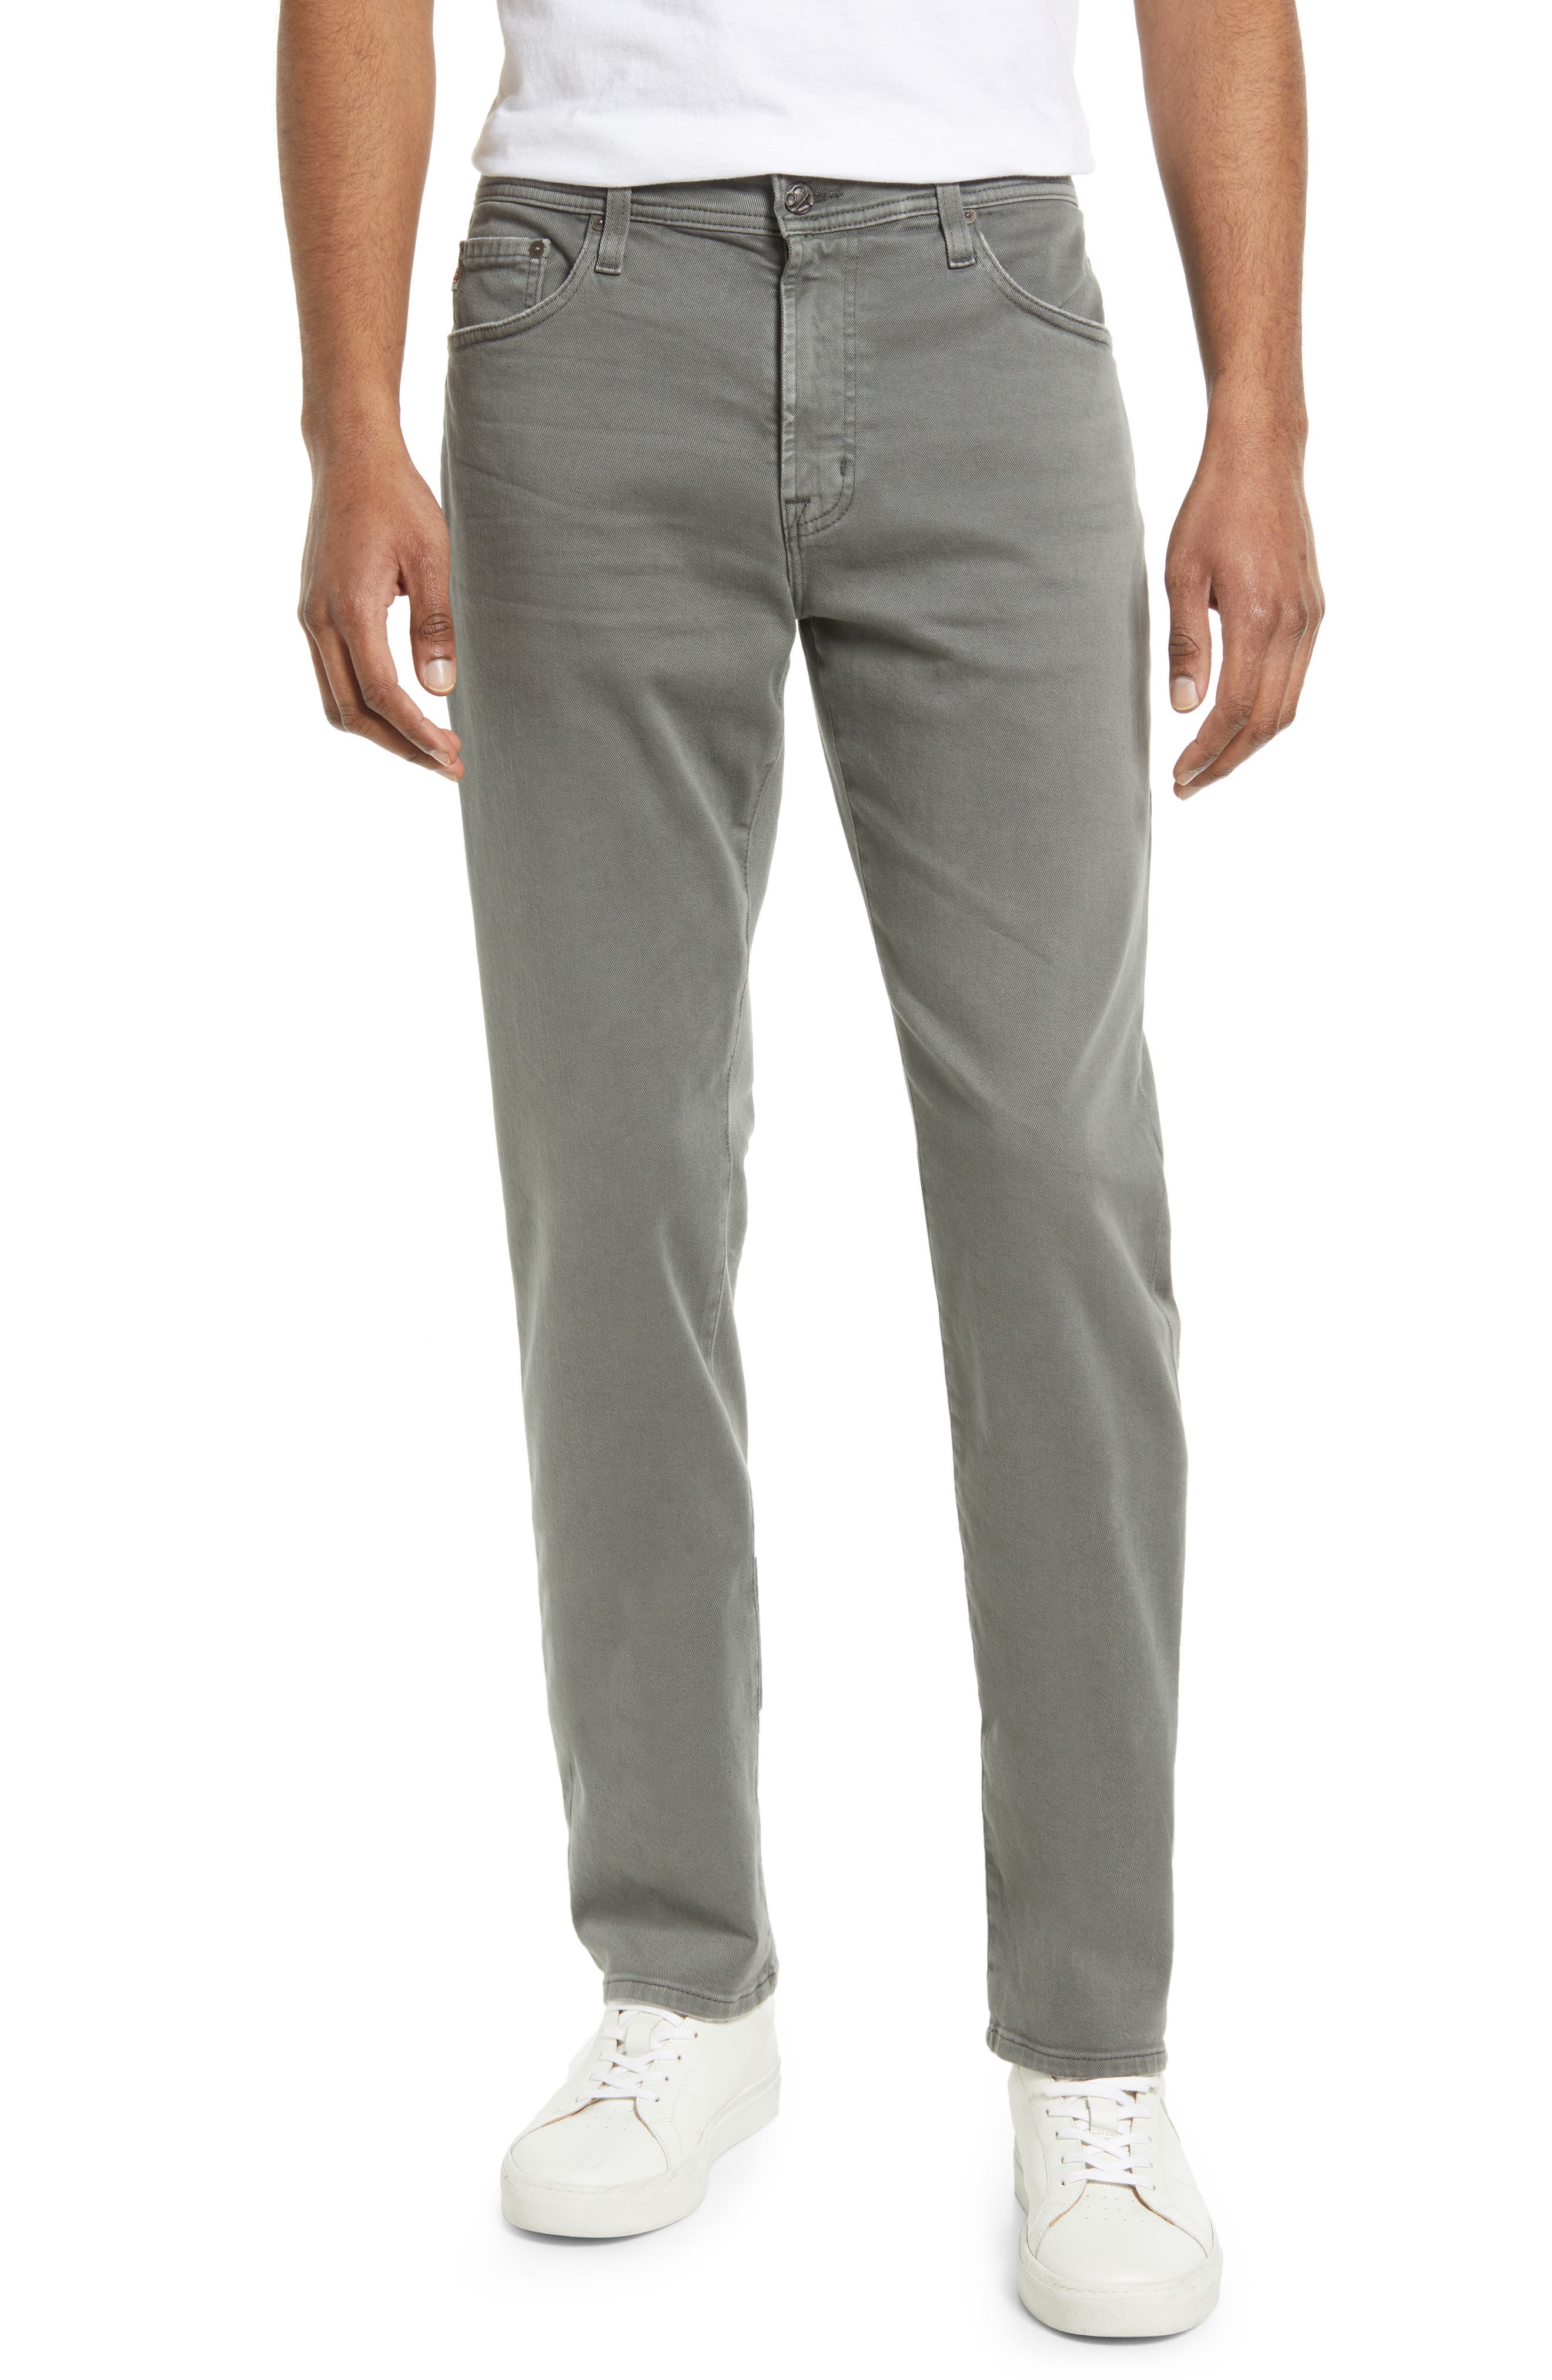 Grey for Men Mens Clothing Jeans Tapered jeans PT Torino Denim Pants in Grey 